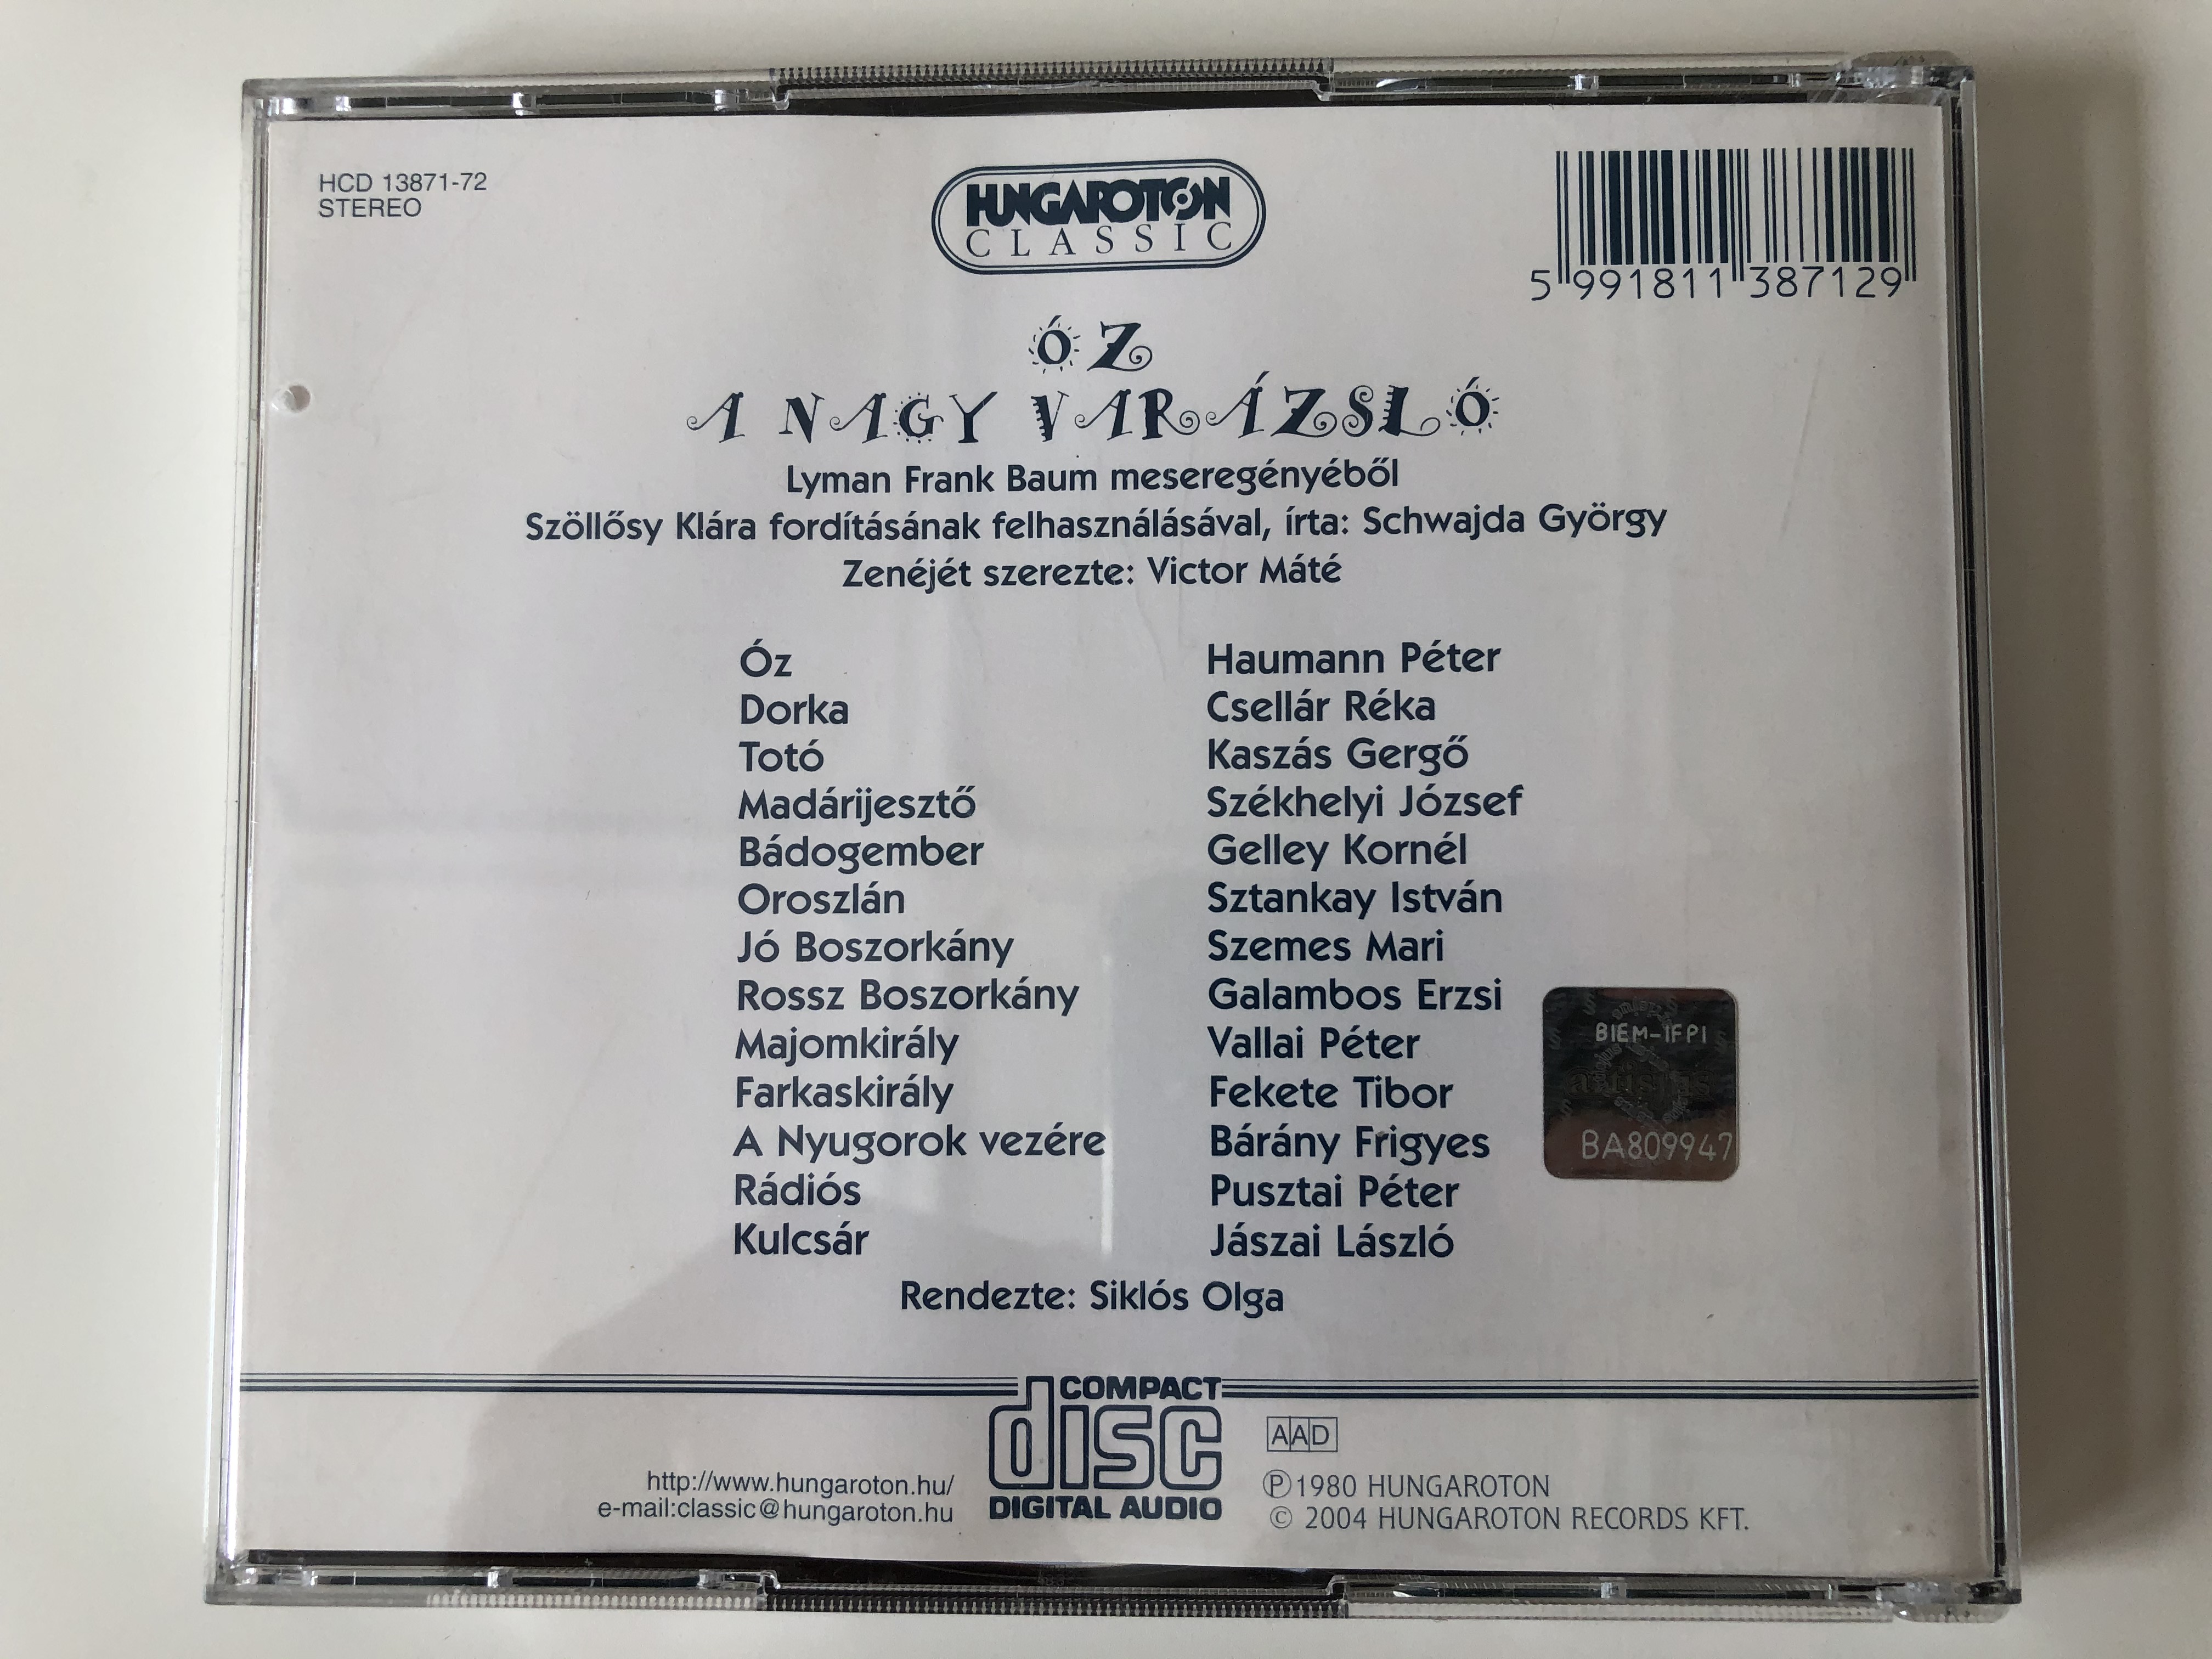 oz-anagy-varazslo-hungaroton-classic-2x-audio-cd-2004-stereo-hcd-13871-72-7-.jpg